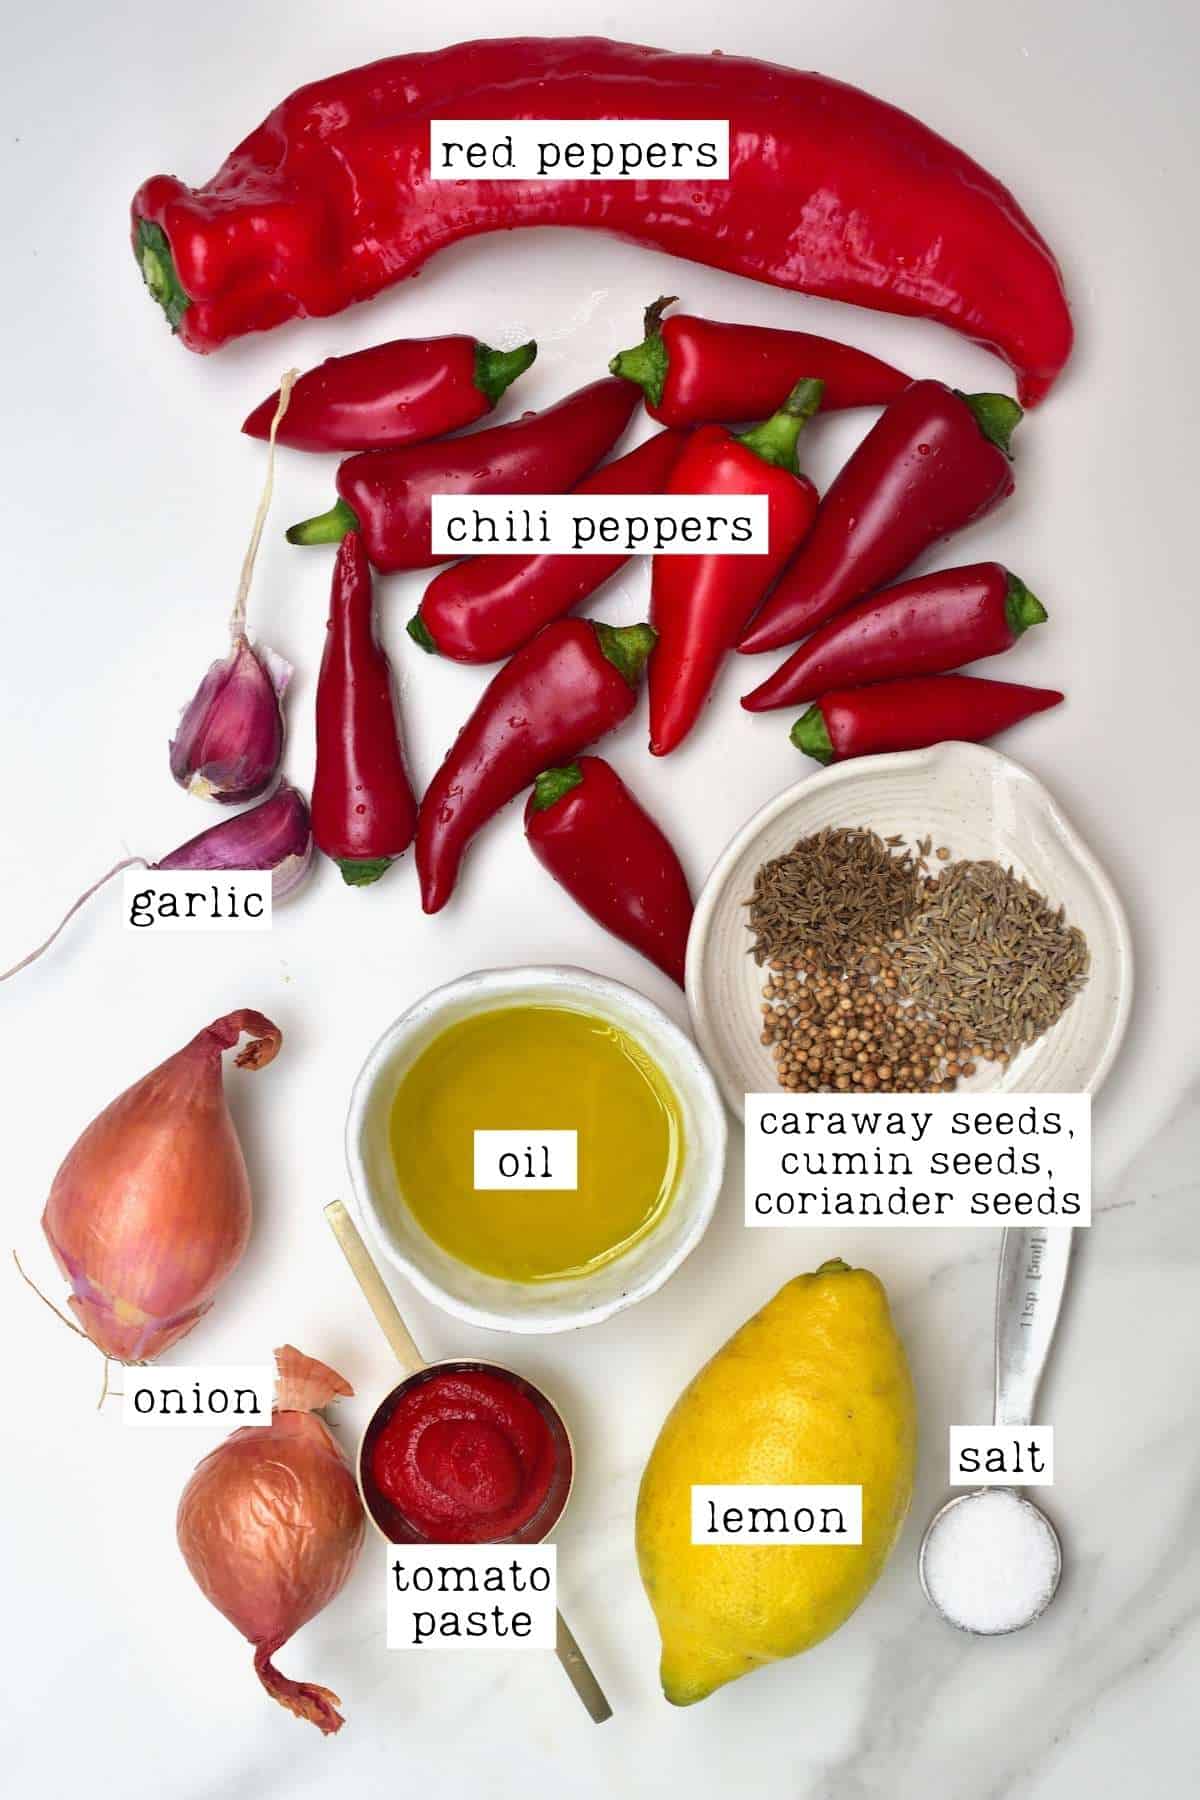 Ingredients for harissa sauce